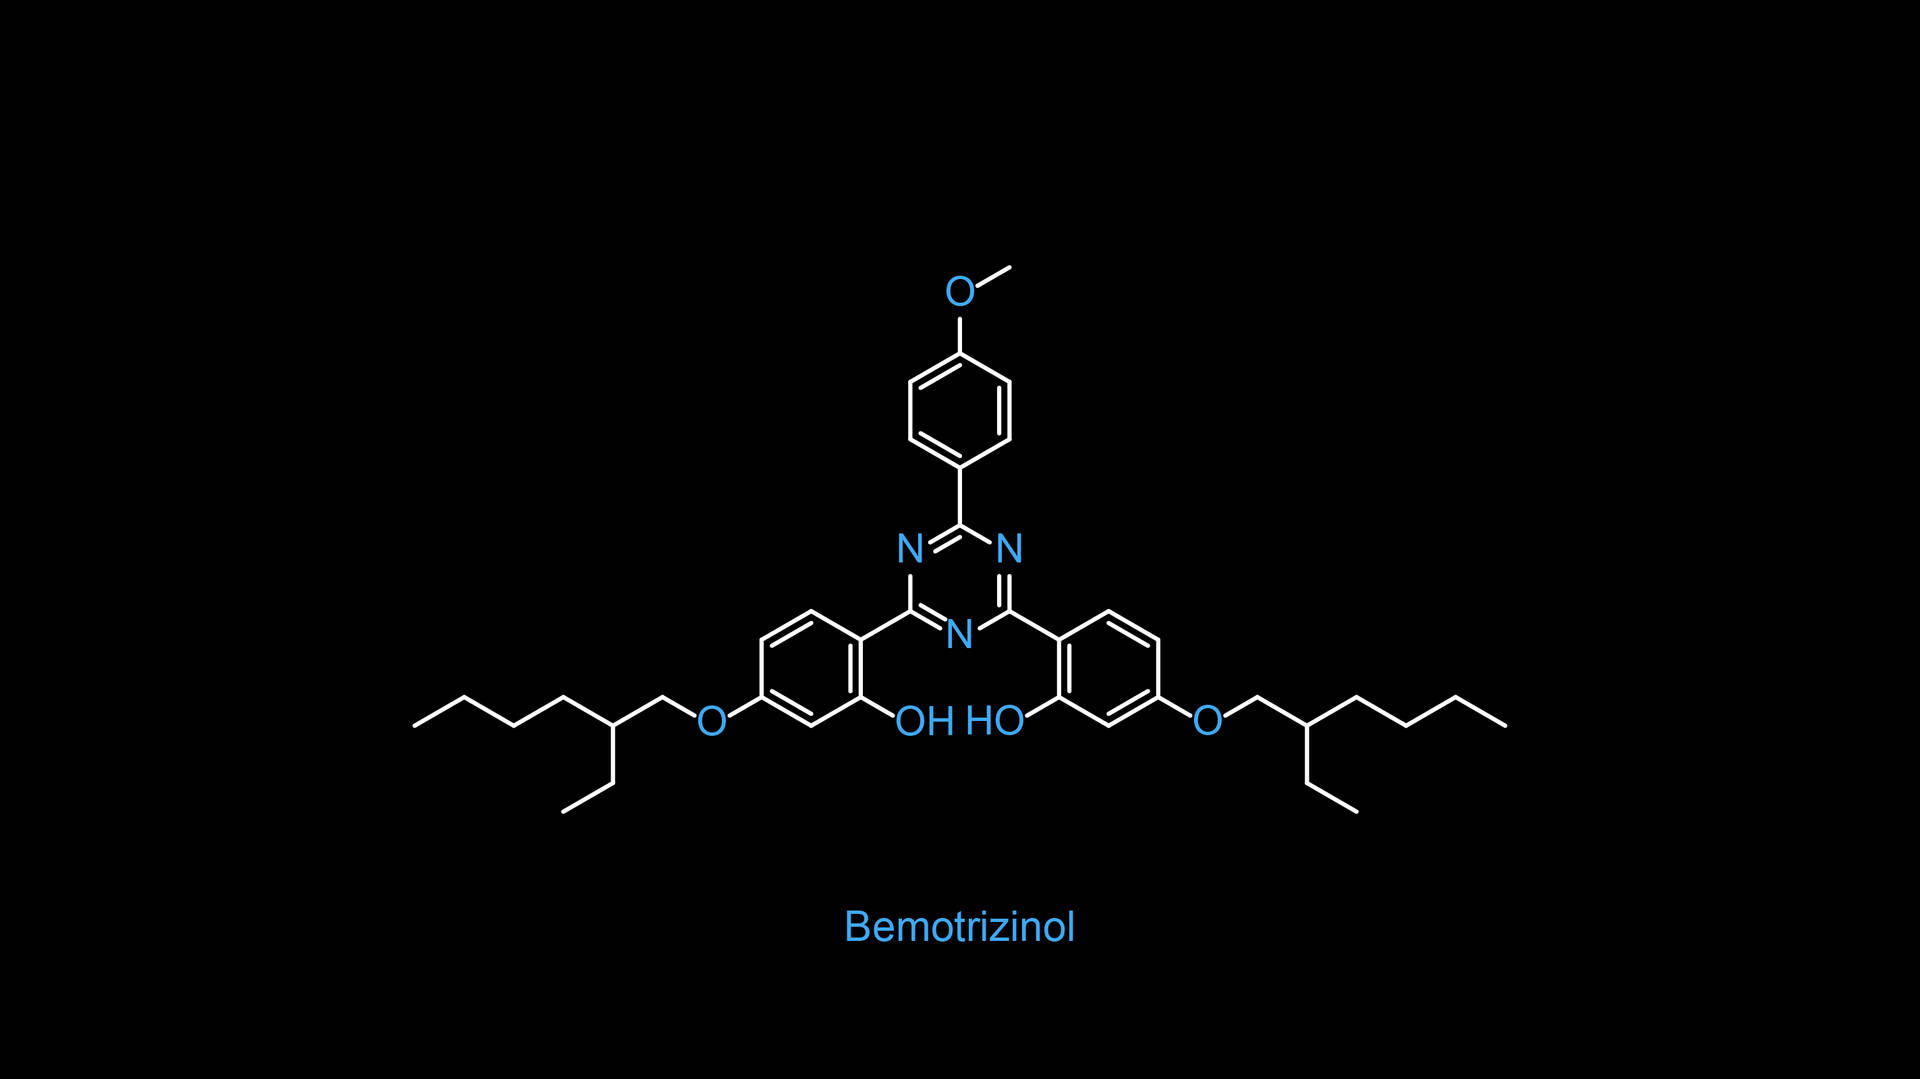 Chemistry background  molecule models and formulas handdrawn  illustration  CanStock